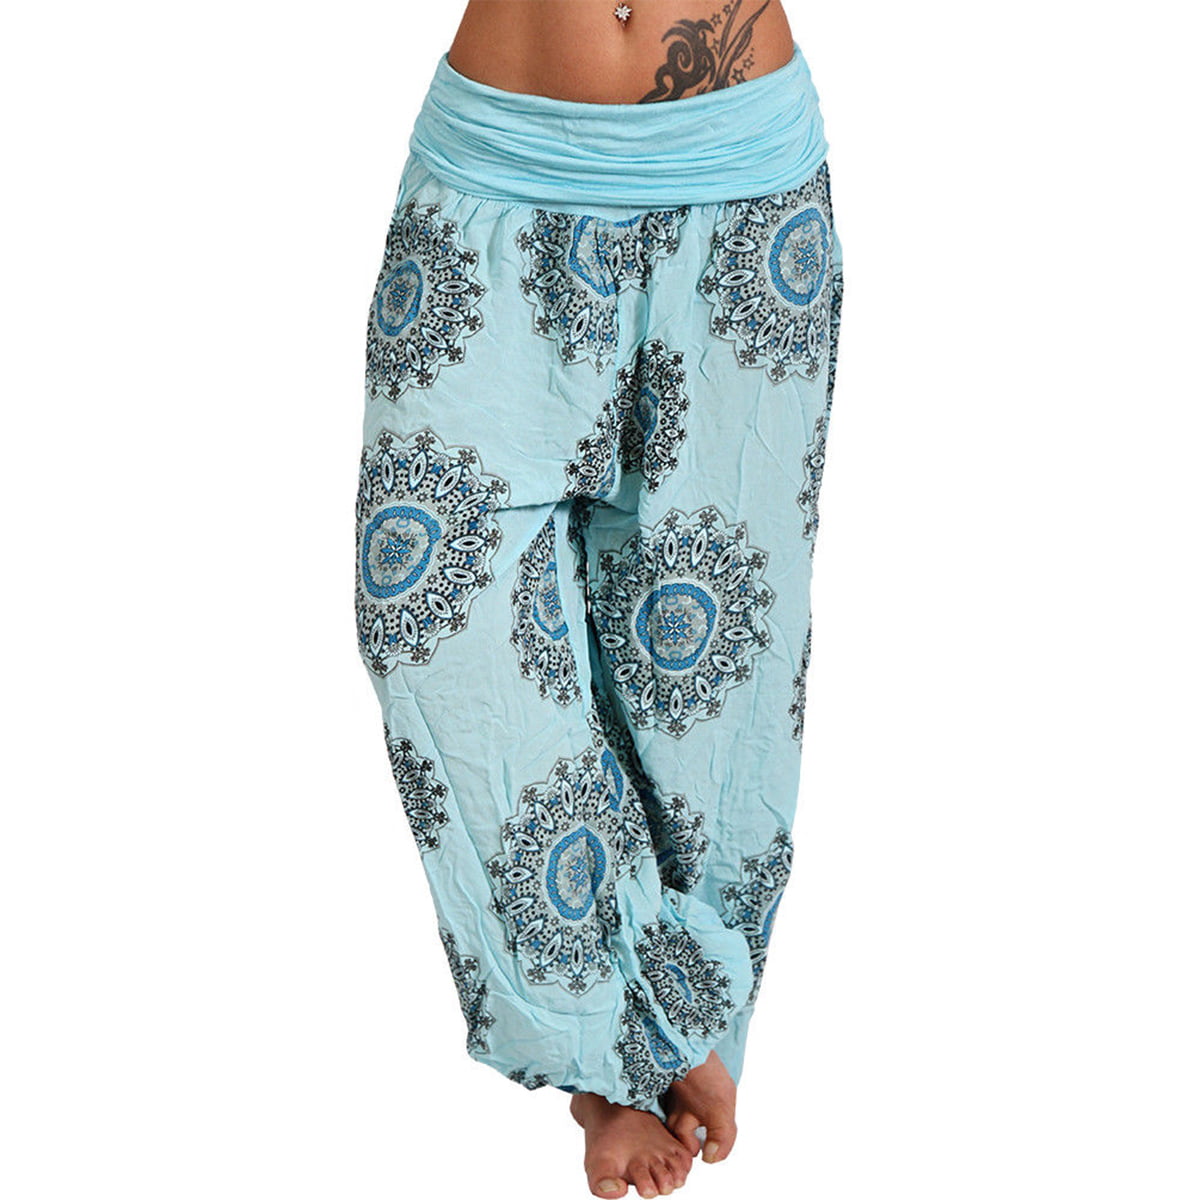 Women Yoga Beach Boho Hippie Pants - Walmart.com - Walmart.com